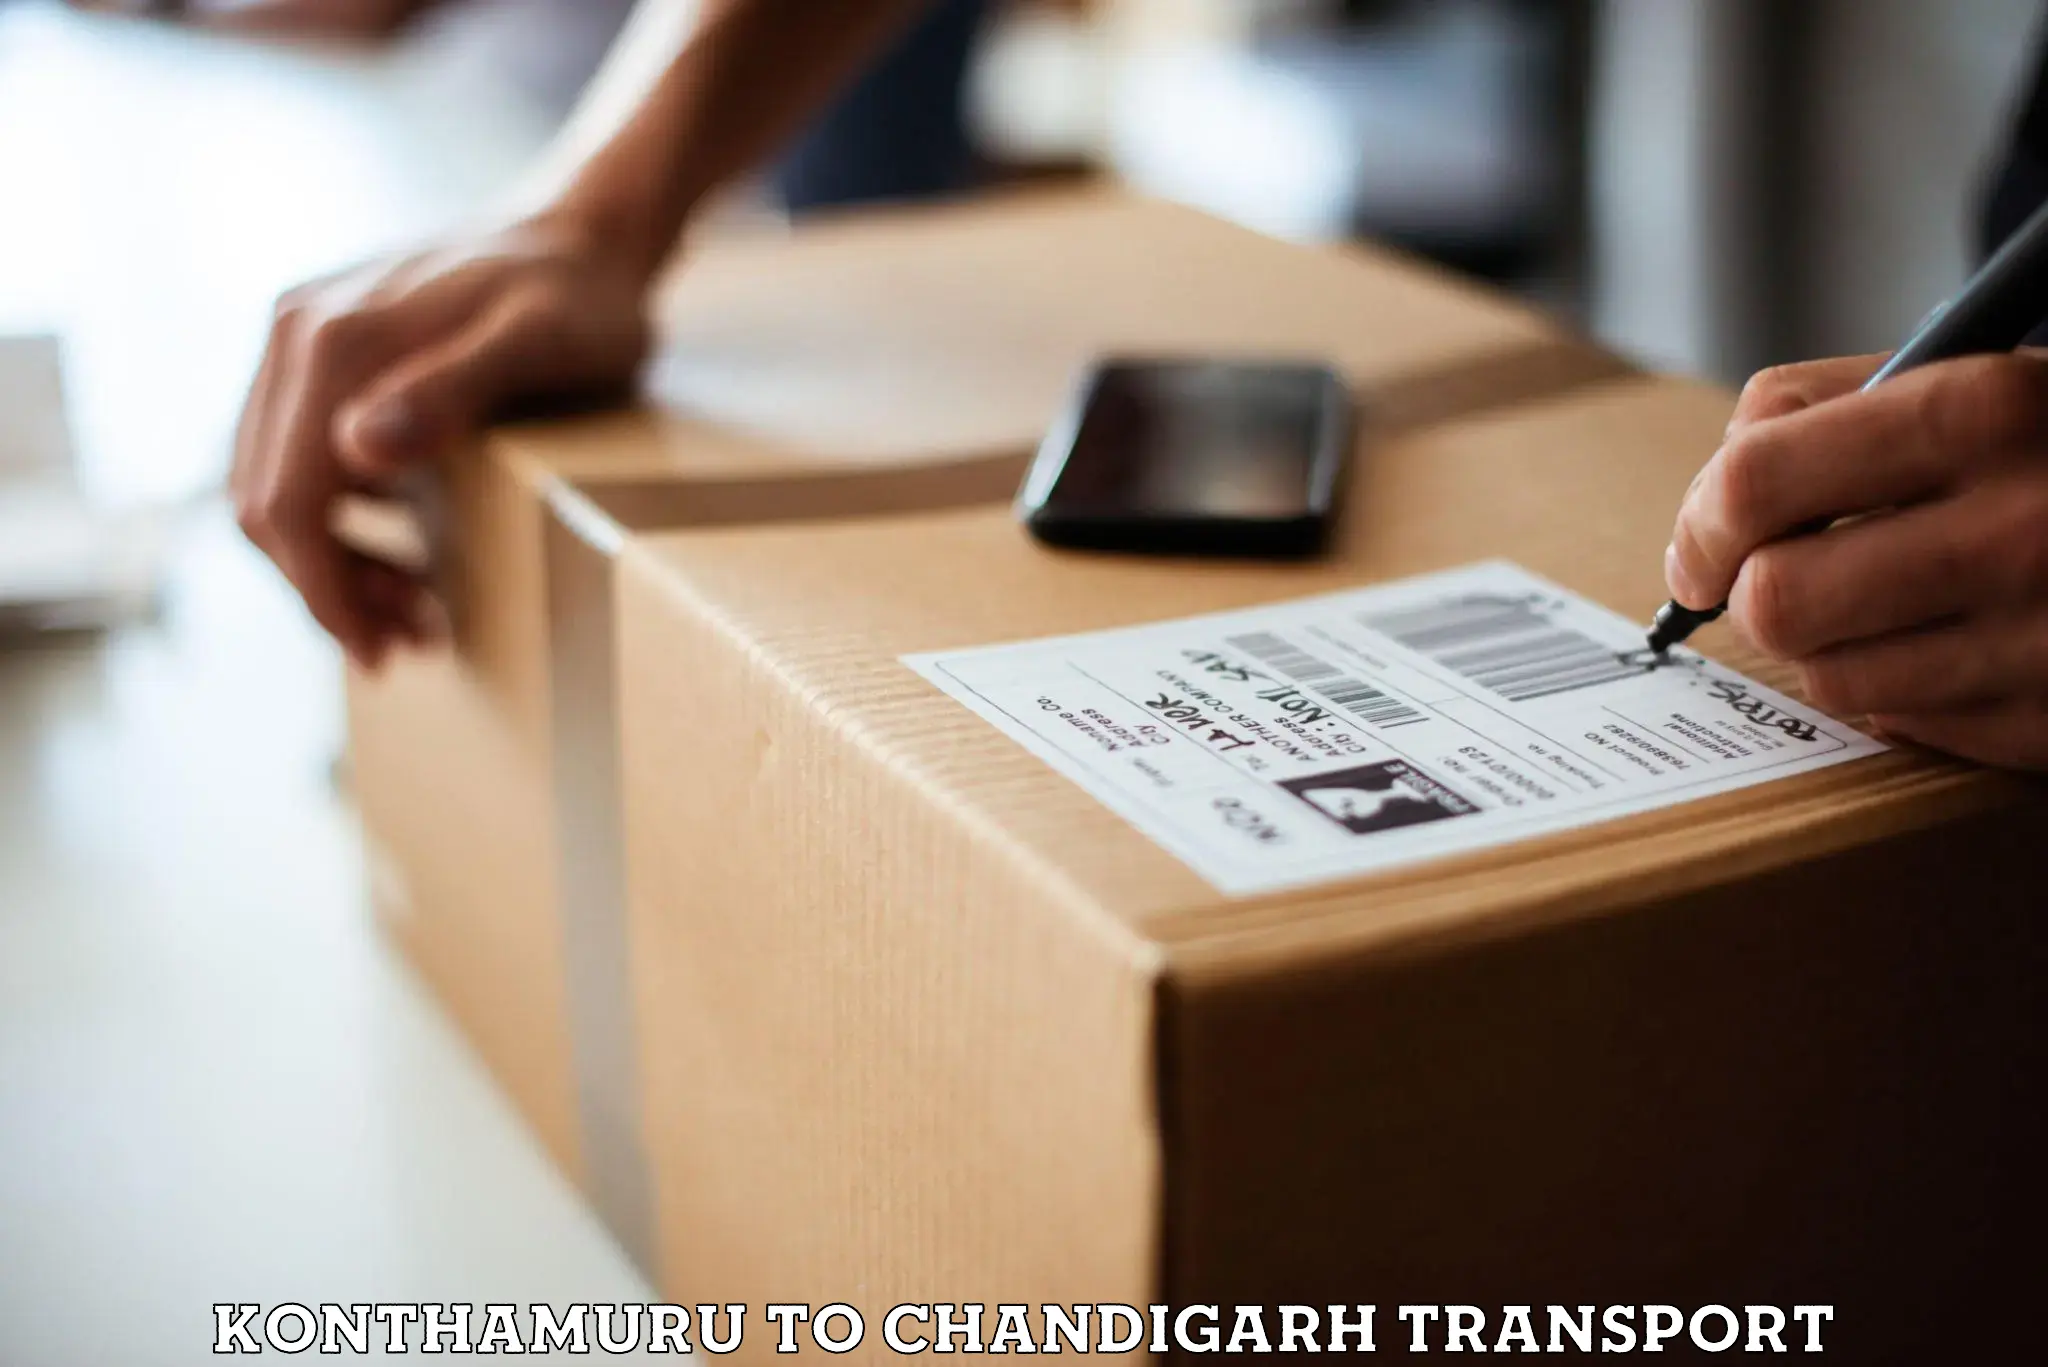 Truck transport companies in India Konthamuru to Chandigarh